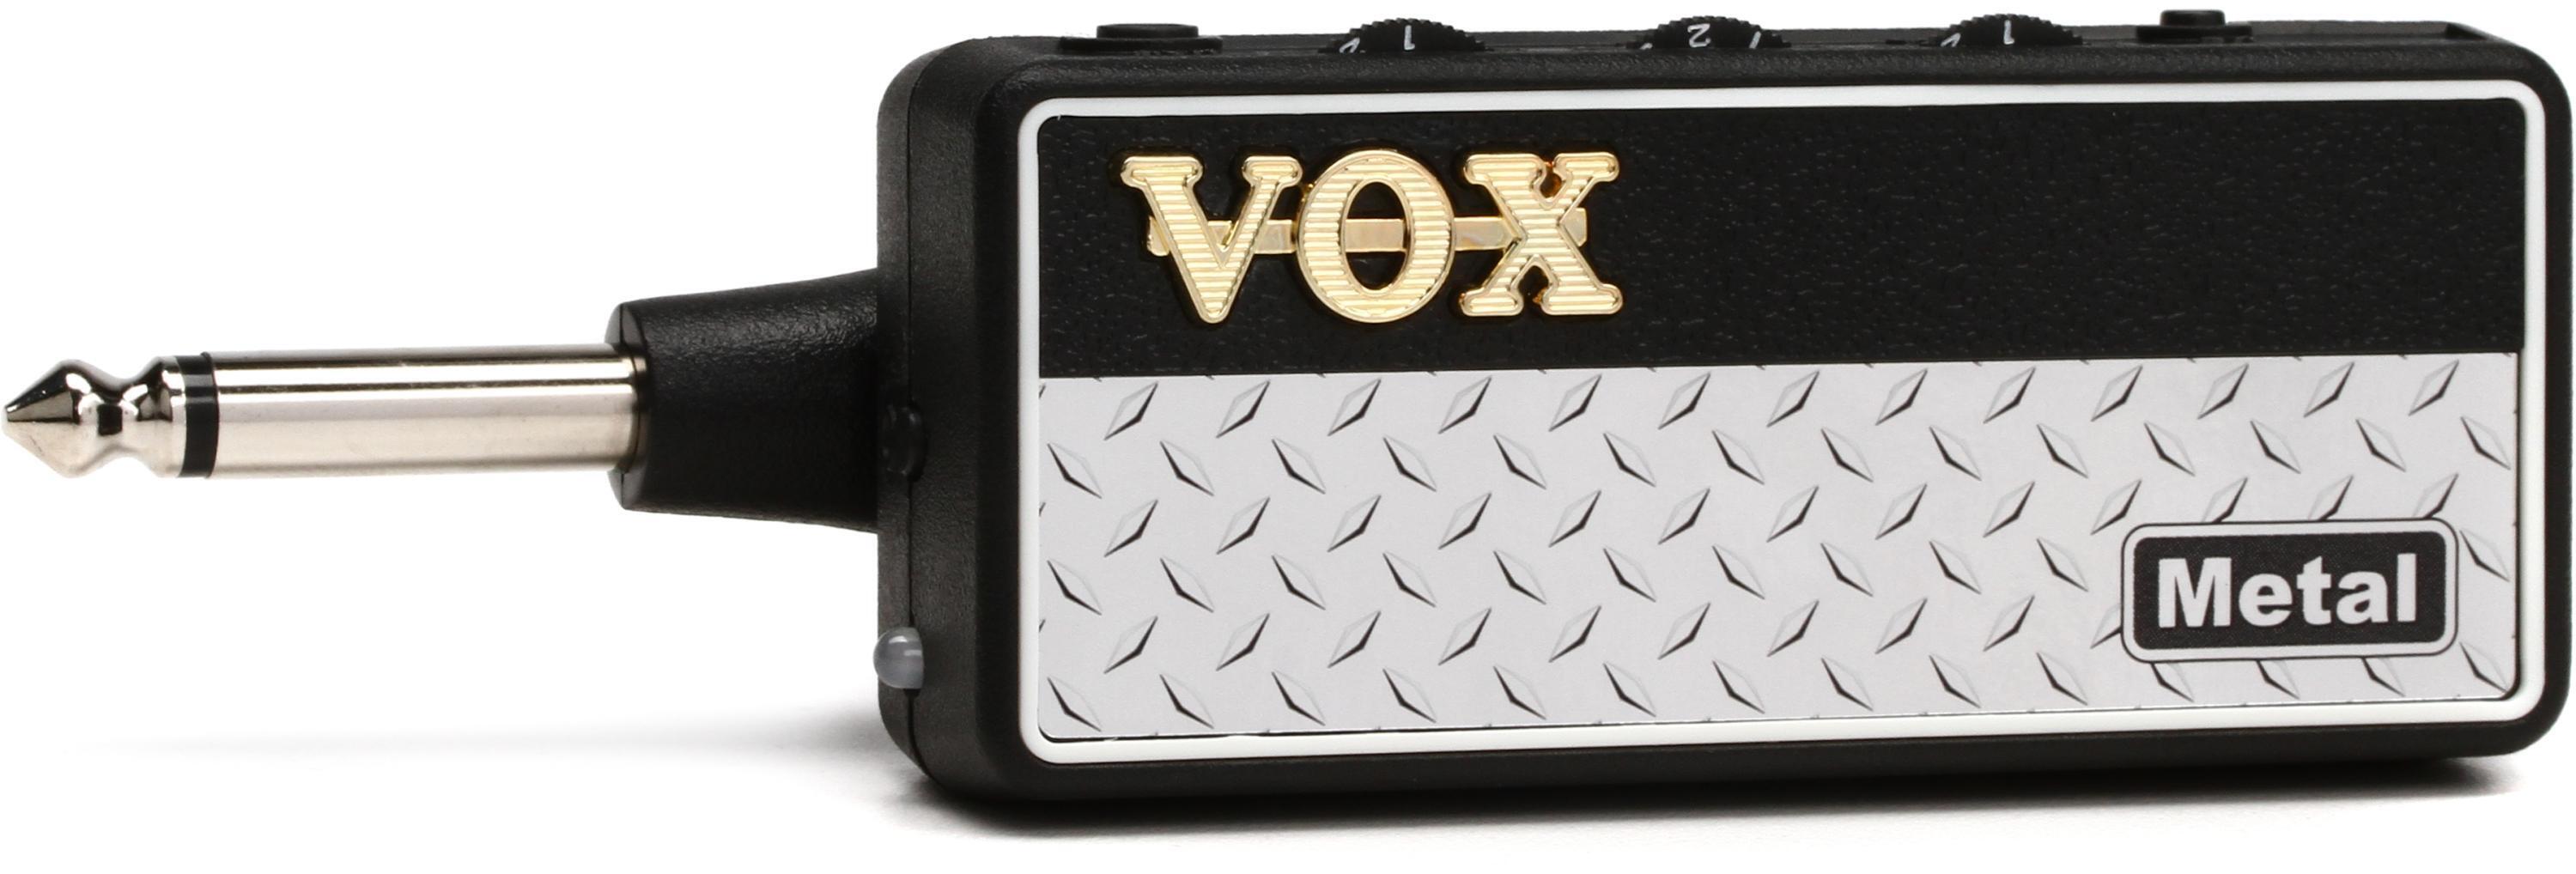 Vox Amplug 2 Guitar/ Bass Headphone Amplifier, All Models - AC30, Classic  Rock, Metal, Bass, Clean, Blues, Lead